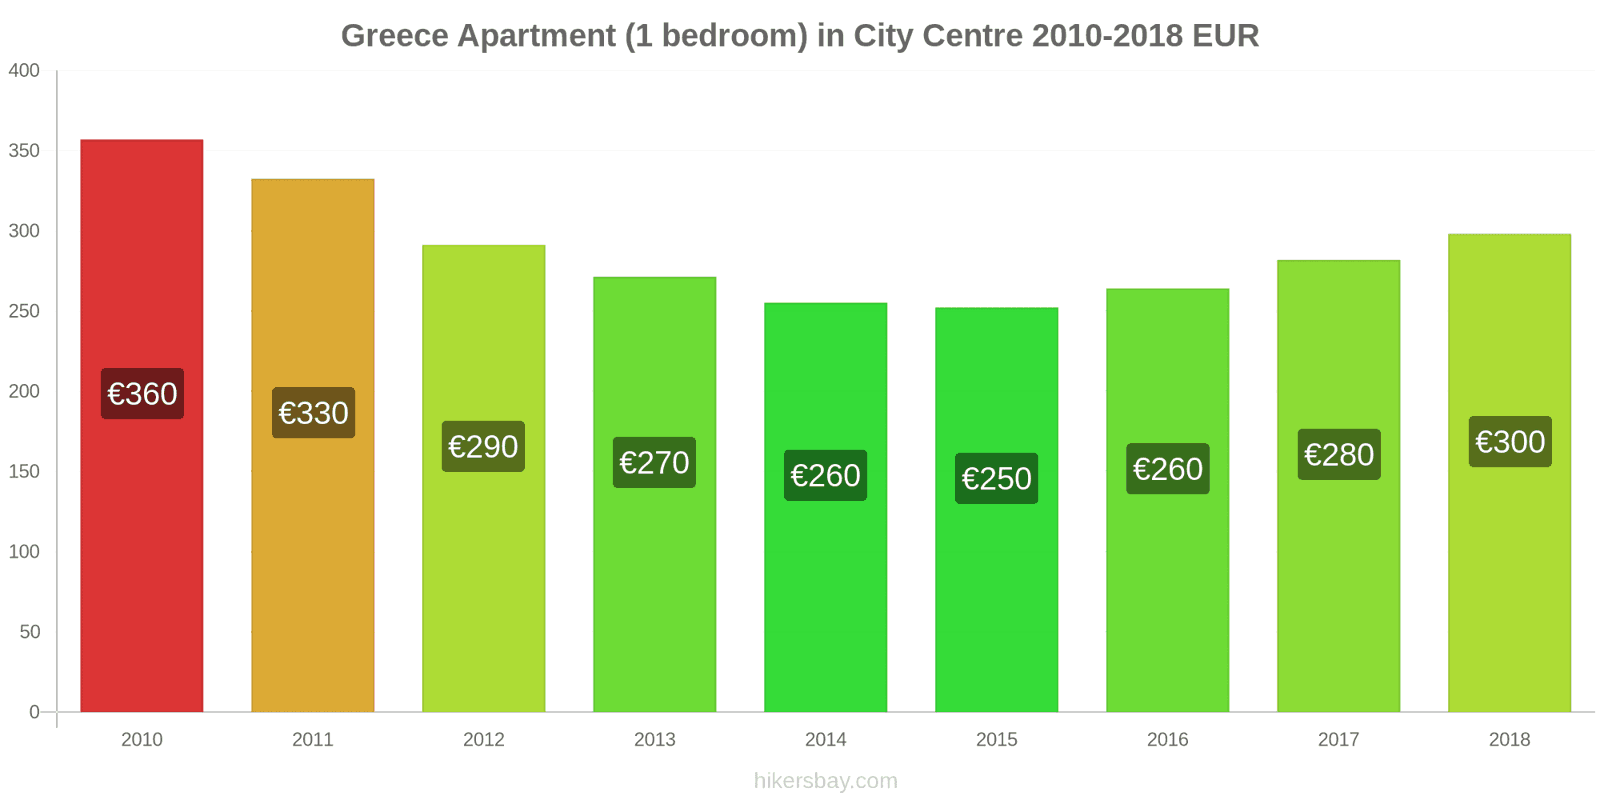 Greece price changes Apartment (1 bedroom) in city centre hikersbay.com